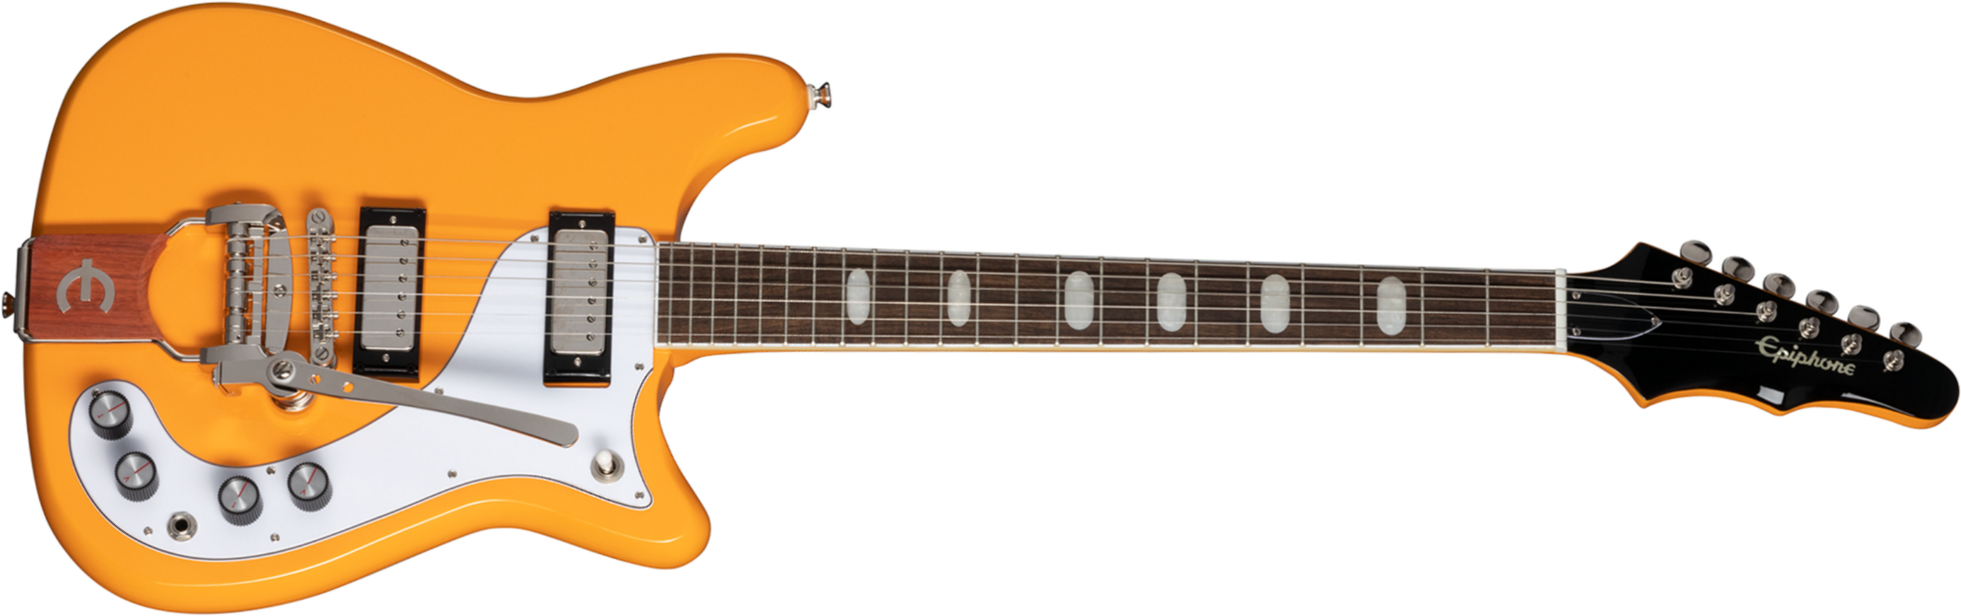 Epiphone Crestwood 150th Anniversary 2h Ht Lau - California Coral - Semi hollow elektriche gitaar - Main picture